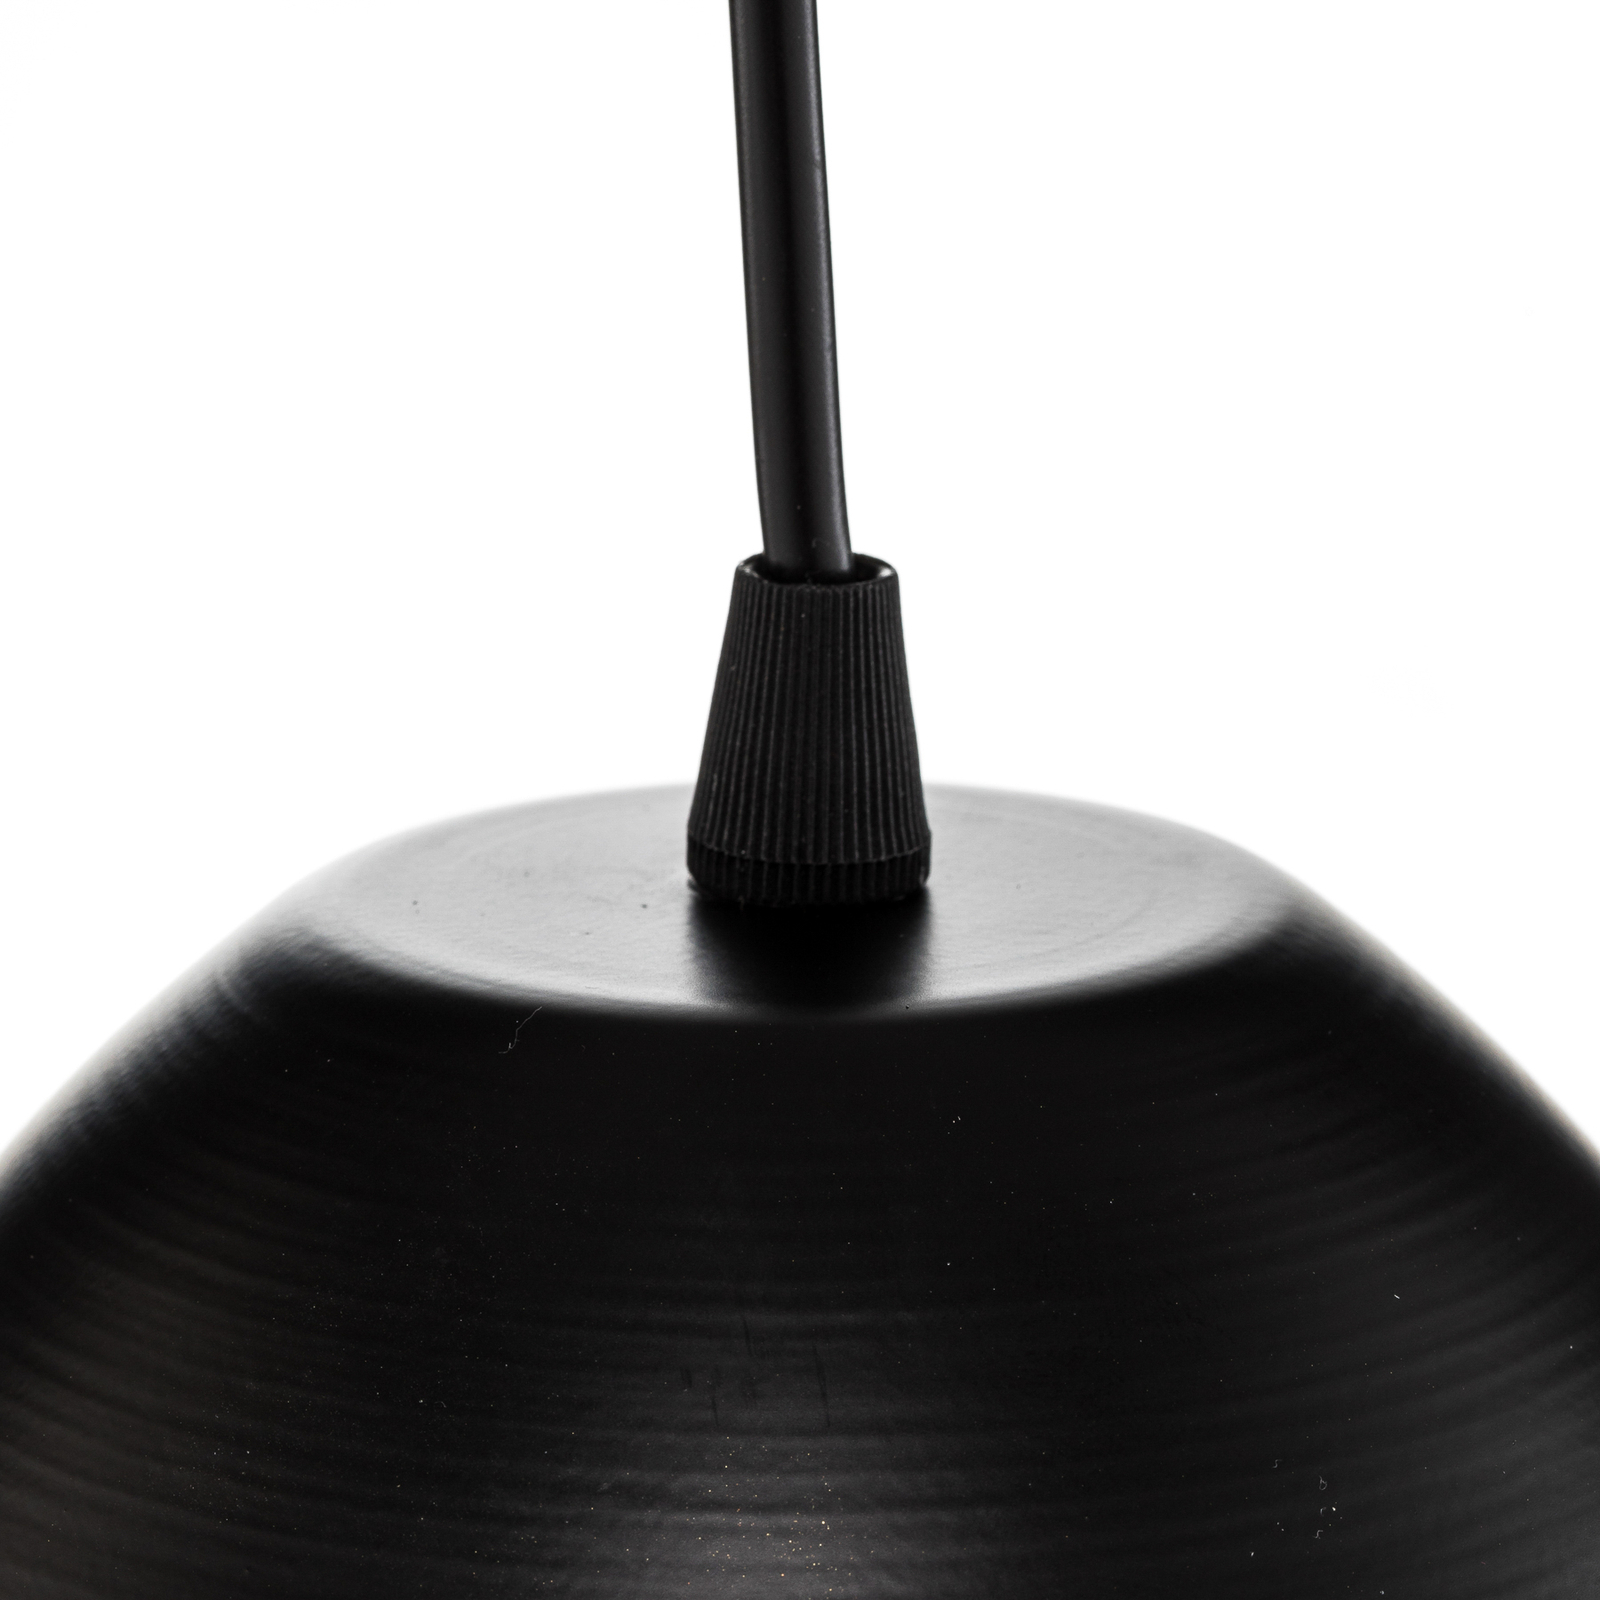 Hanglamp Lenox, 1-lamp, zwart/goud